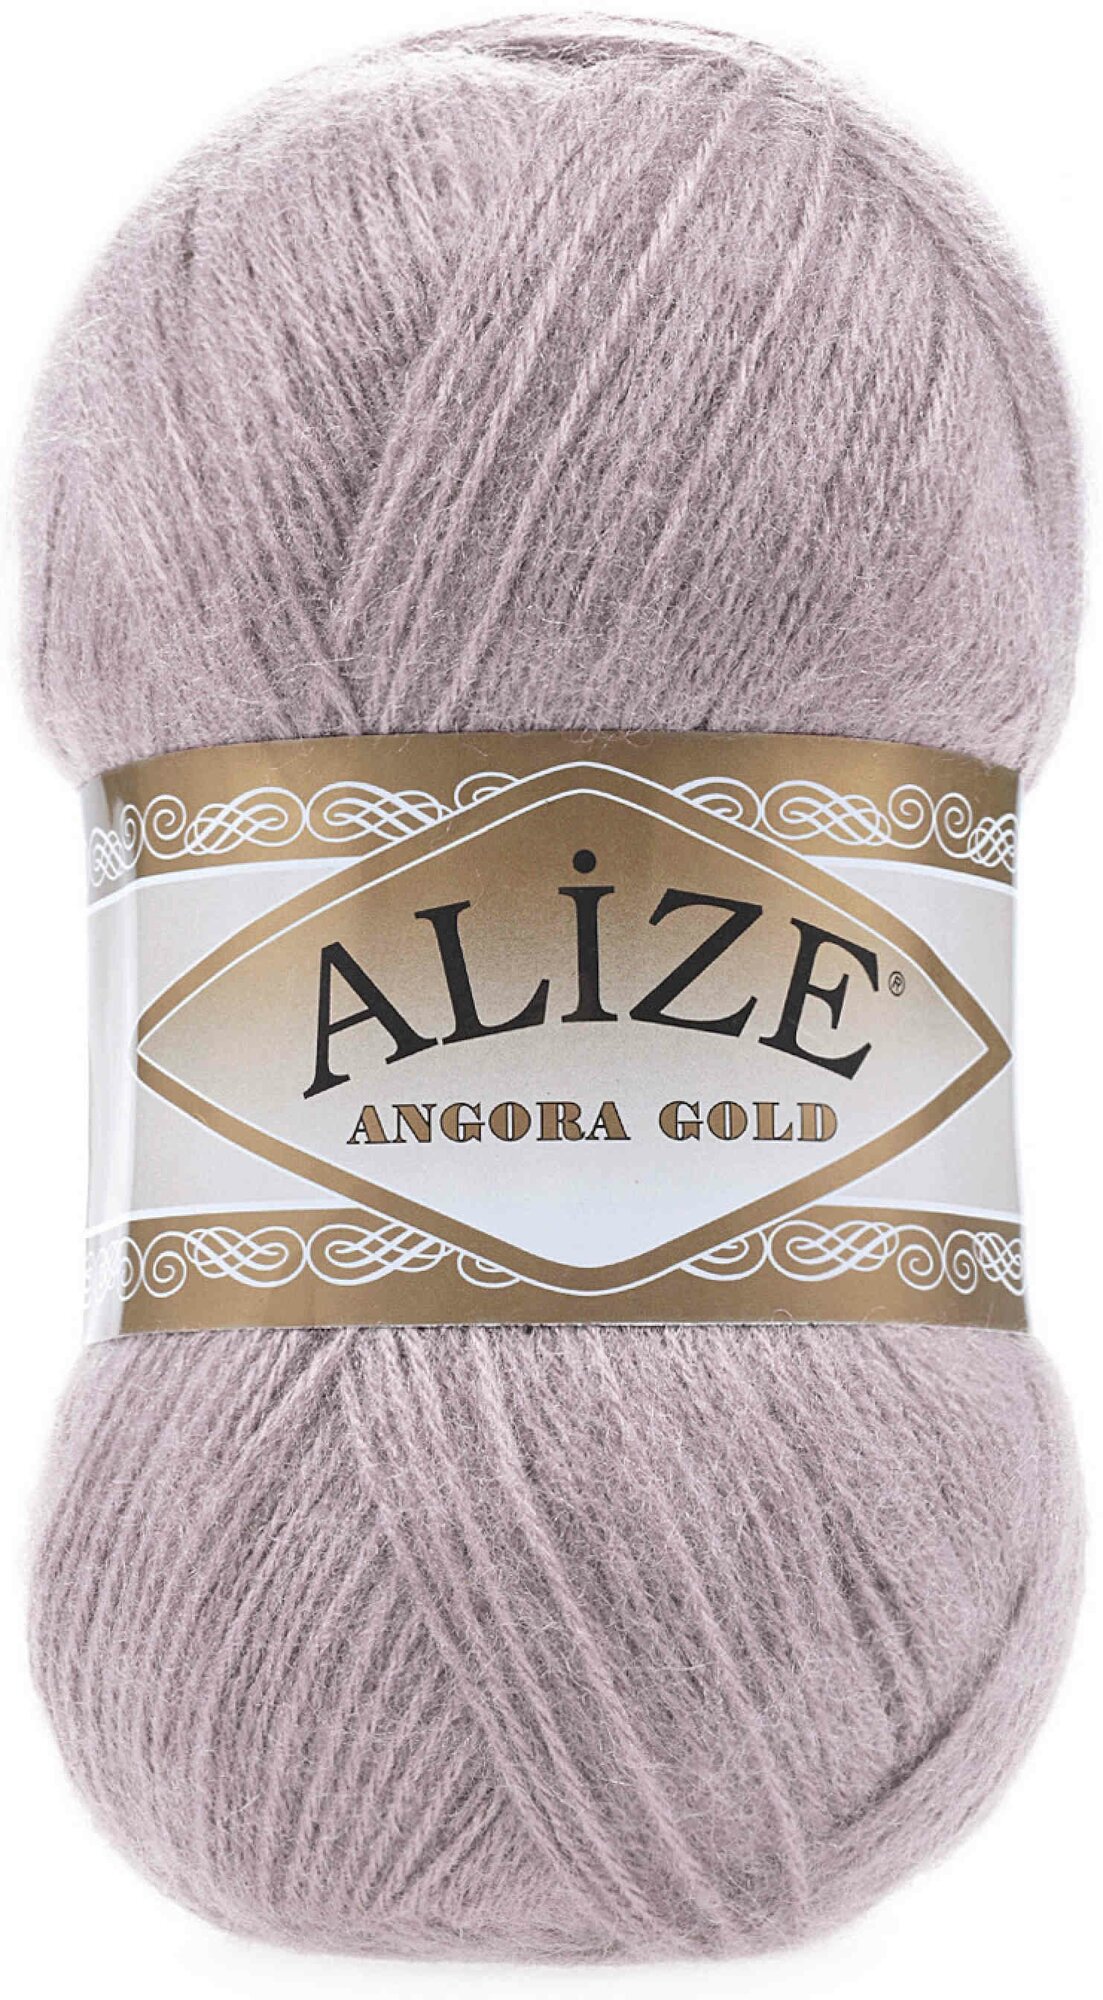  Alize Angora Gold   (163), 80%/20%, 550, 100, 2